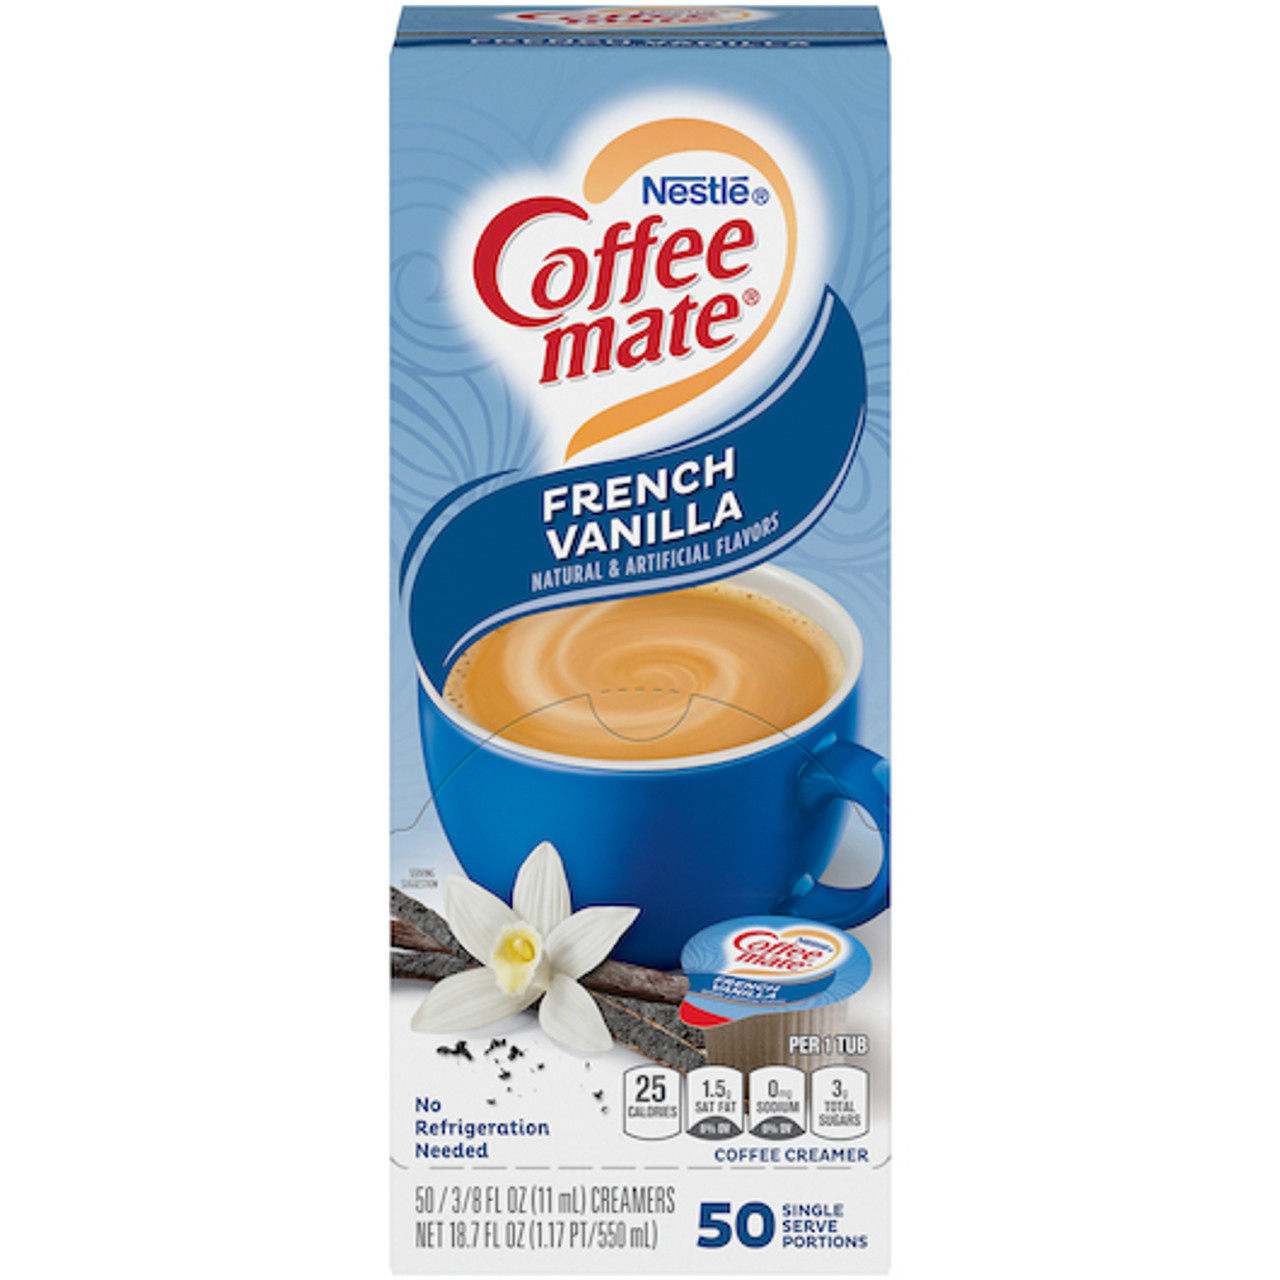 Coffee mate Original Liquid Creamer Singles, 0.375 Fl Oz (Pack of 200)